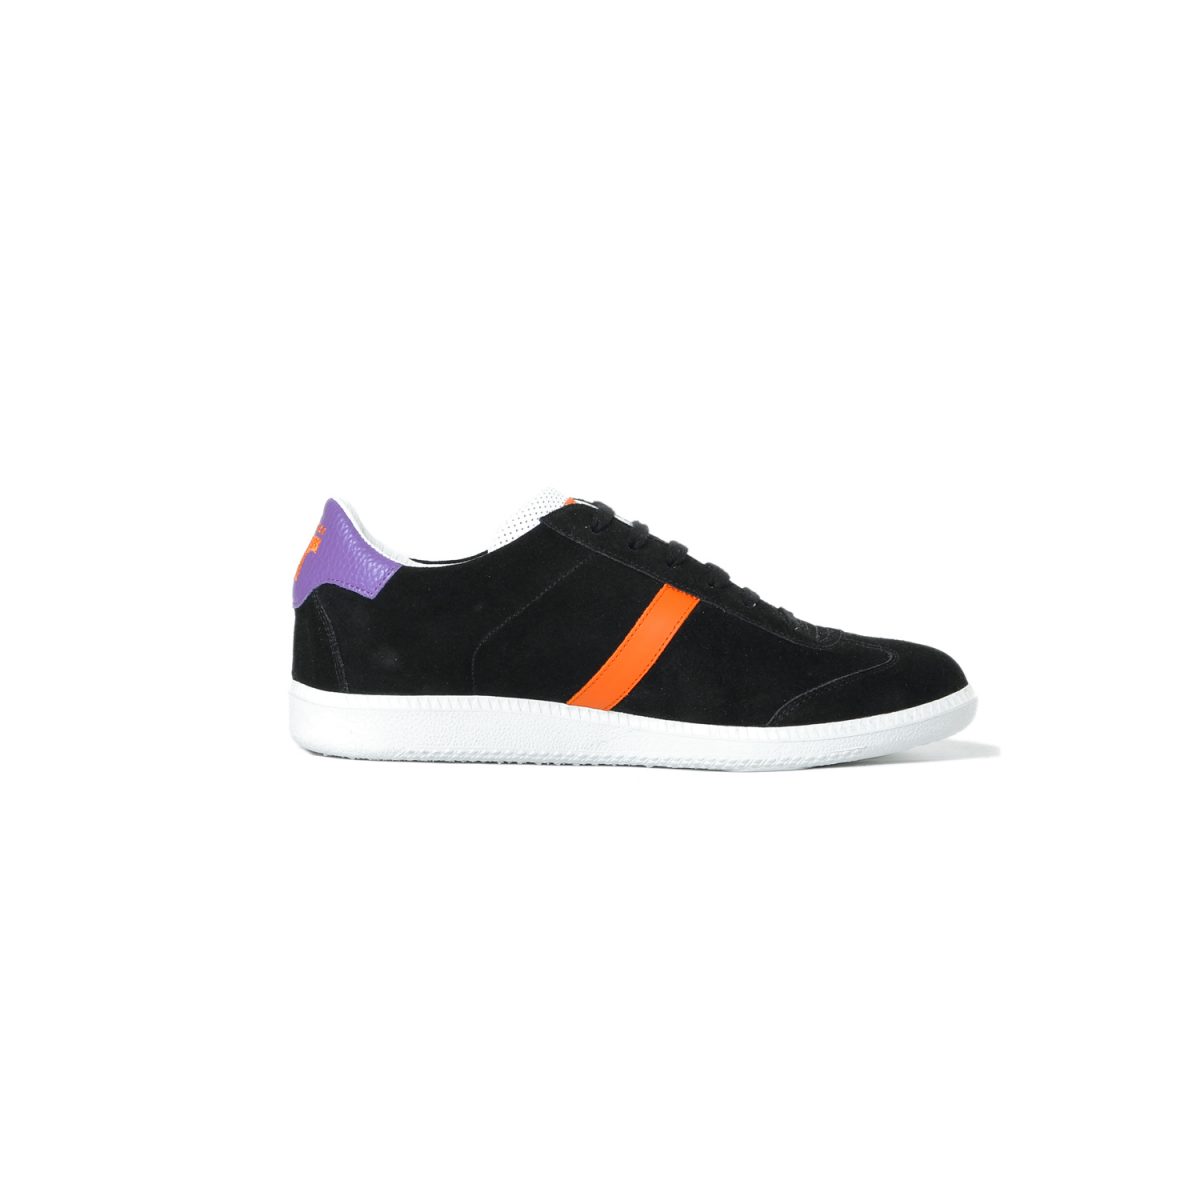 Tisza shoes - Comfort - Black-purple-orange